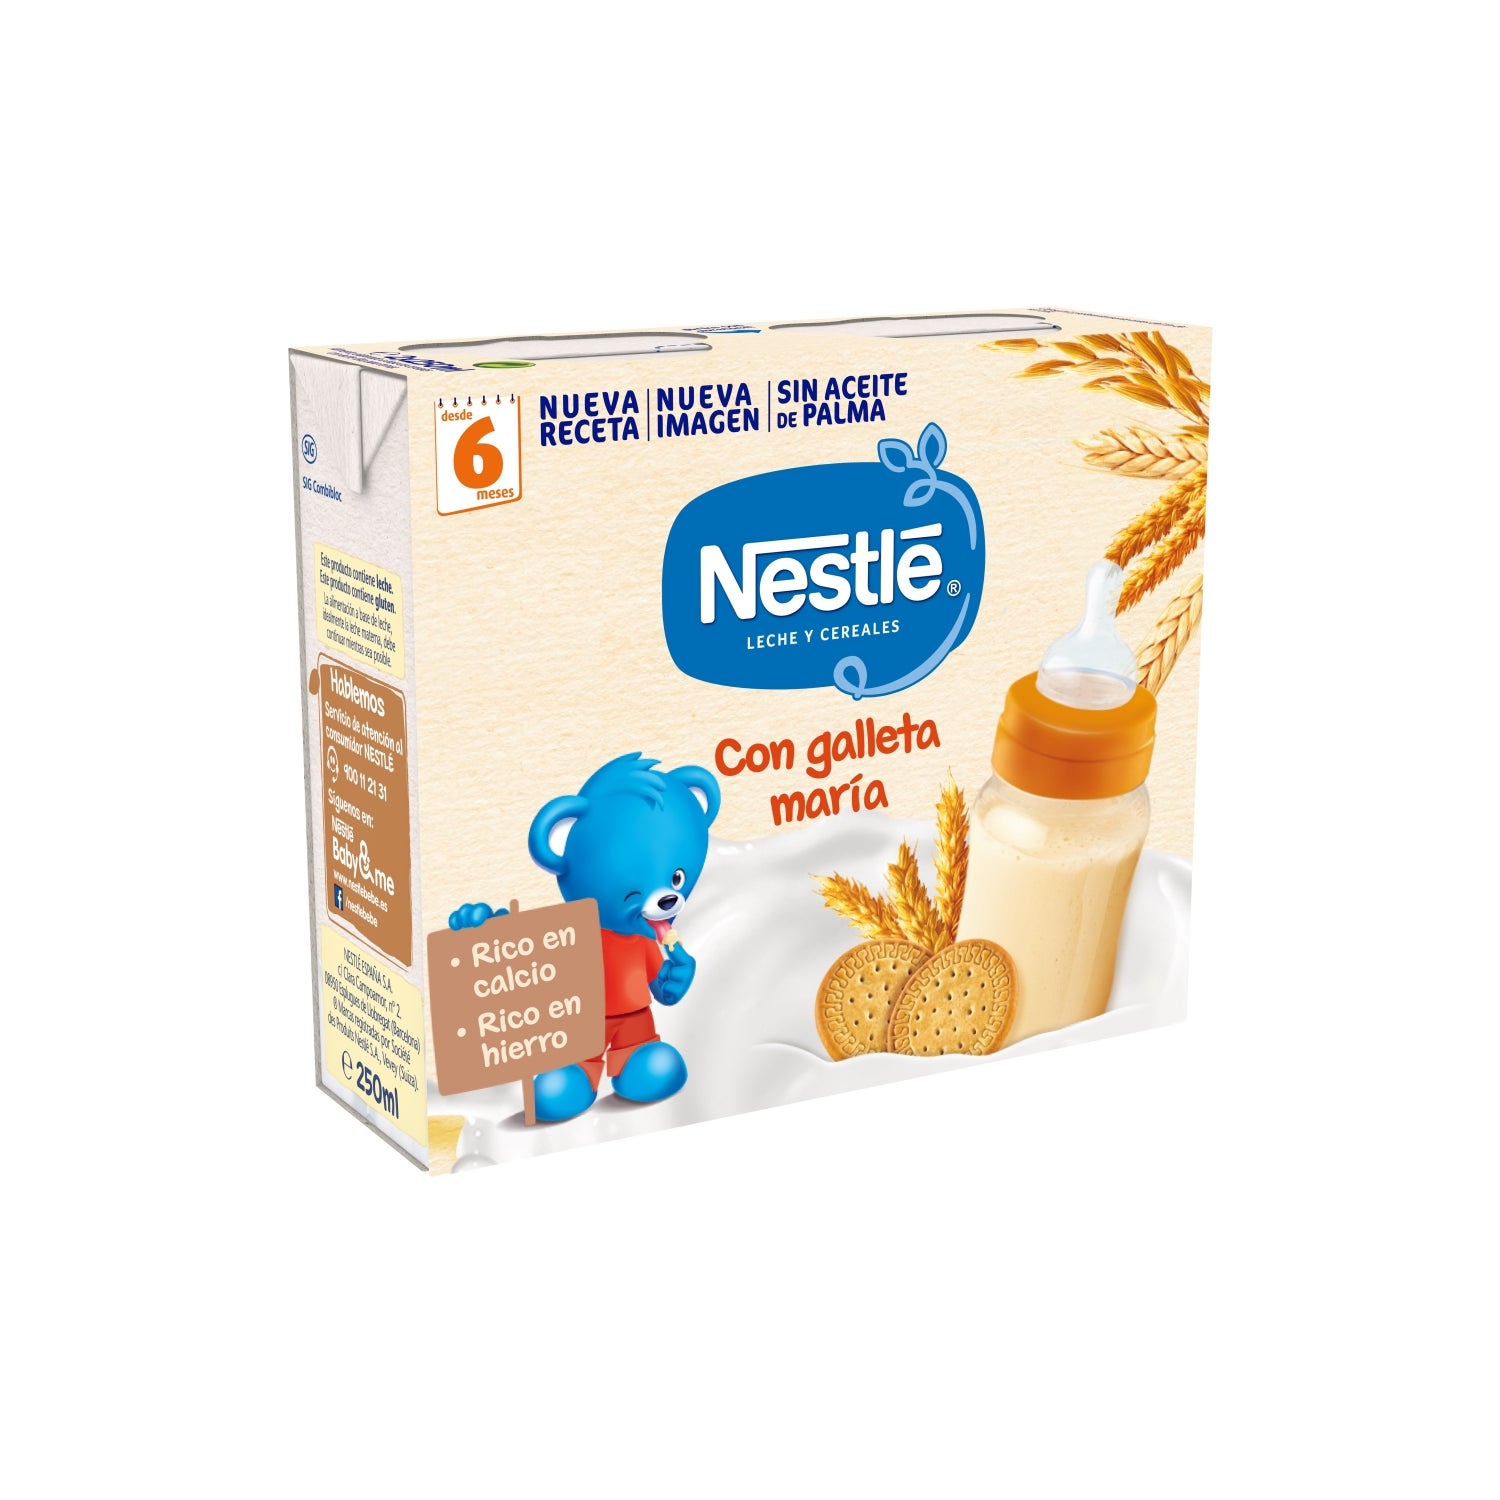 Papilla infantil desde 6 meses 8 cereales con fruta Nestlé sin